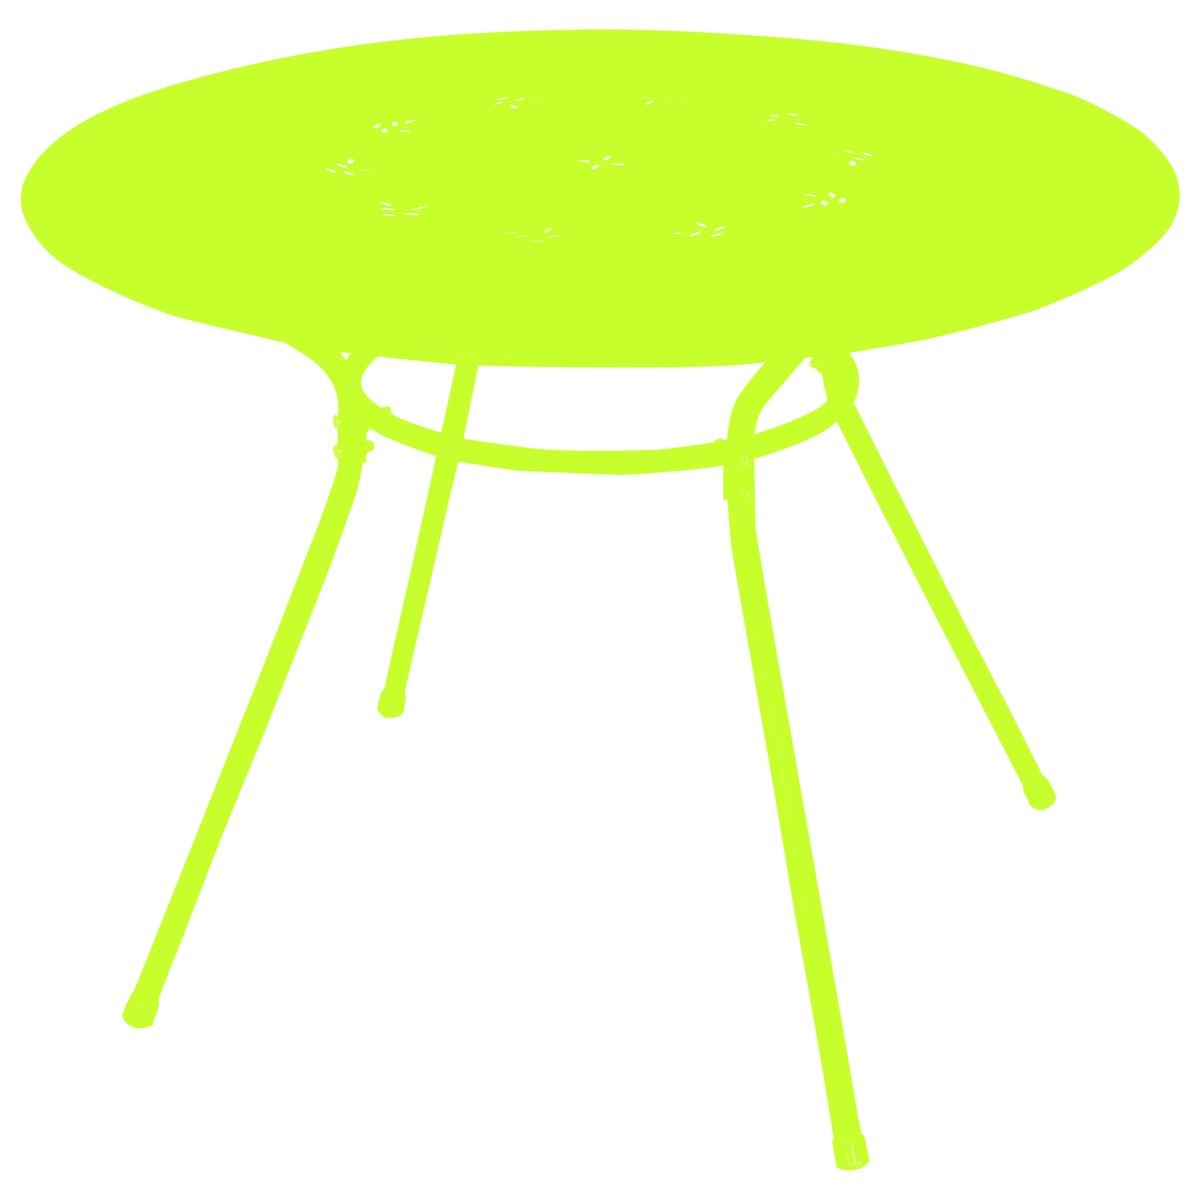 Table Anna - D 95 x H 71 cm - vert